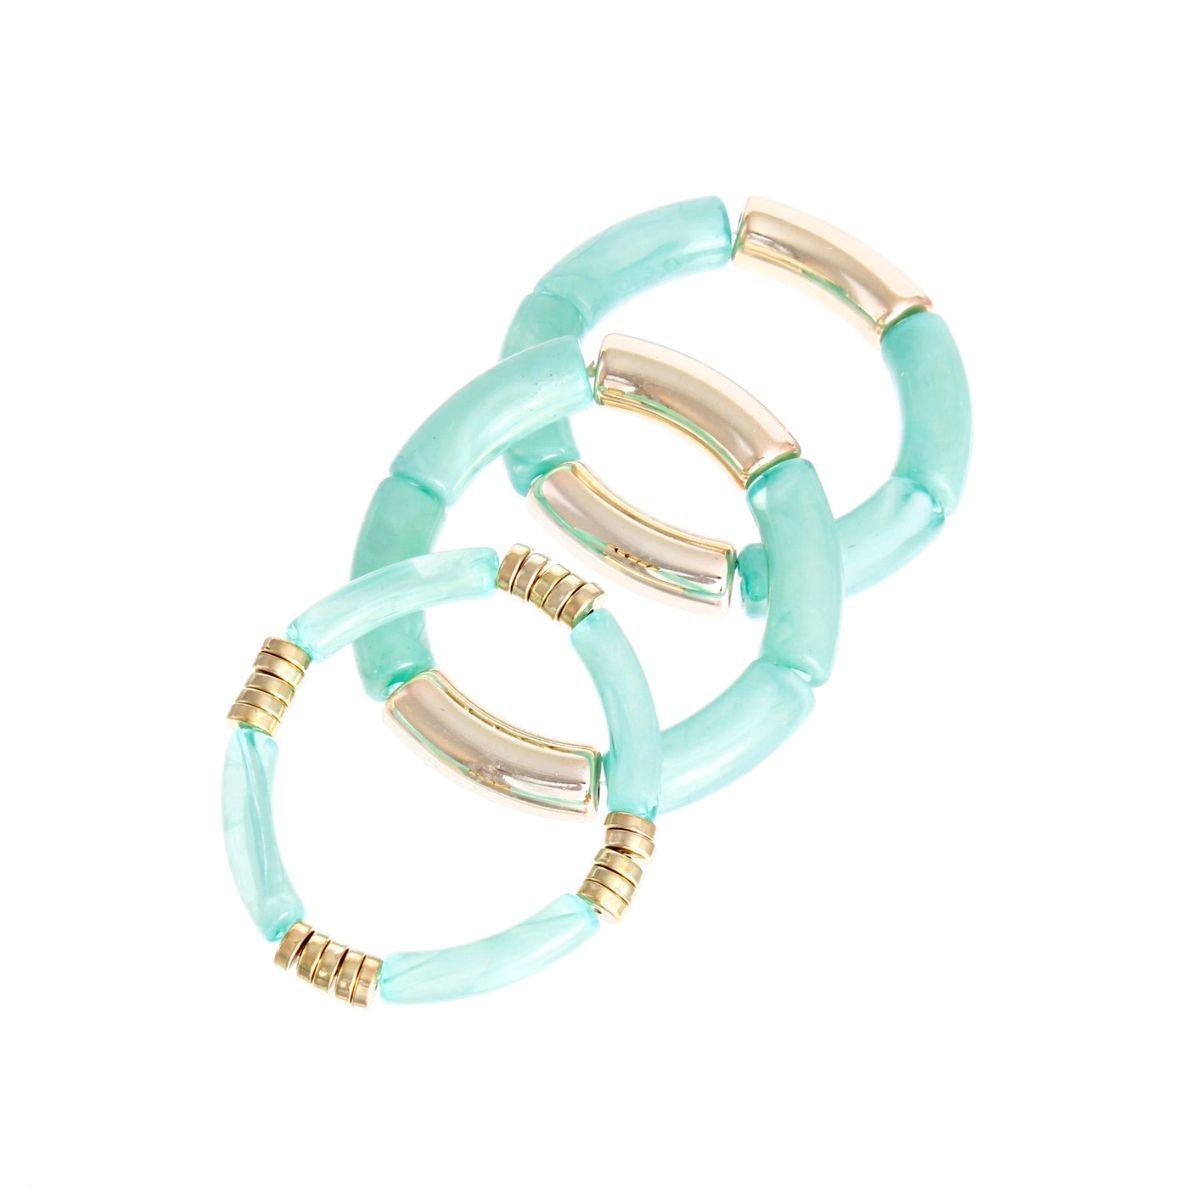 Stylish Turquoise Tube Beaded Stretch Bracelets - Upgrade Your Look Today!